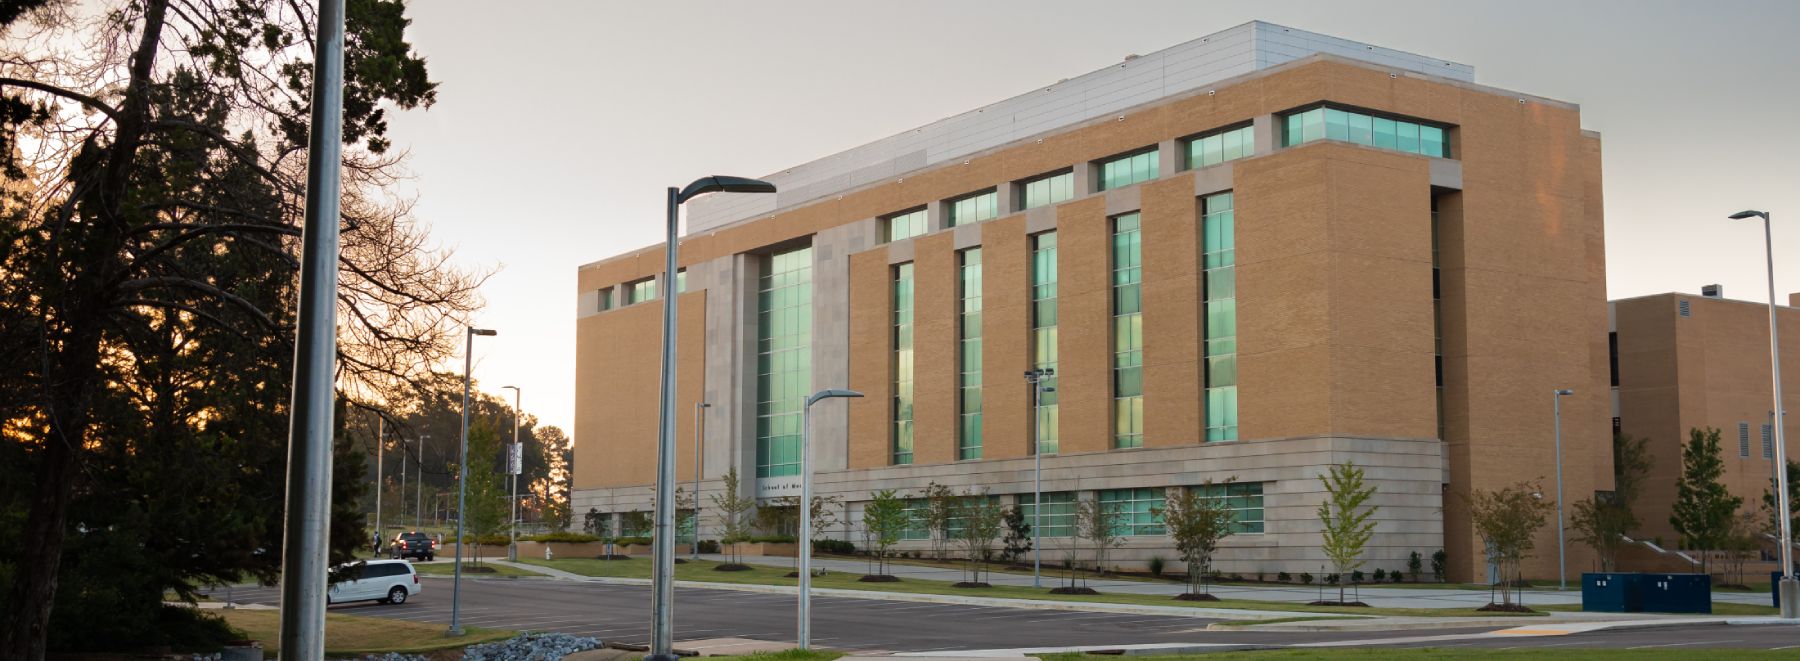 Exterior School of Medicine - UMMC Jackson Campus.